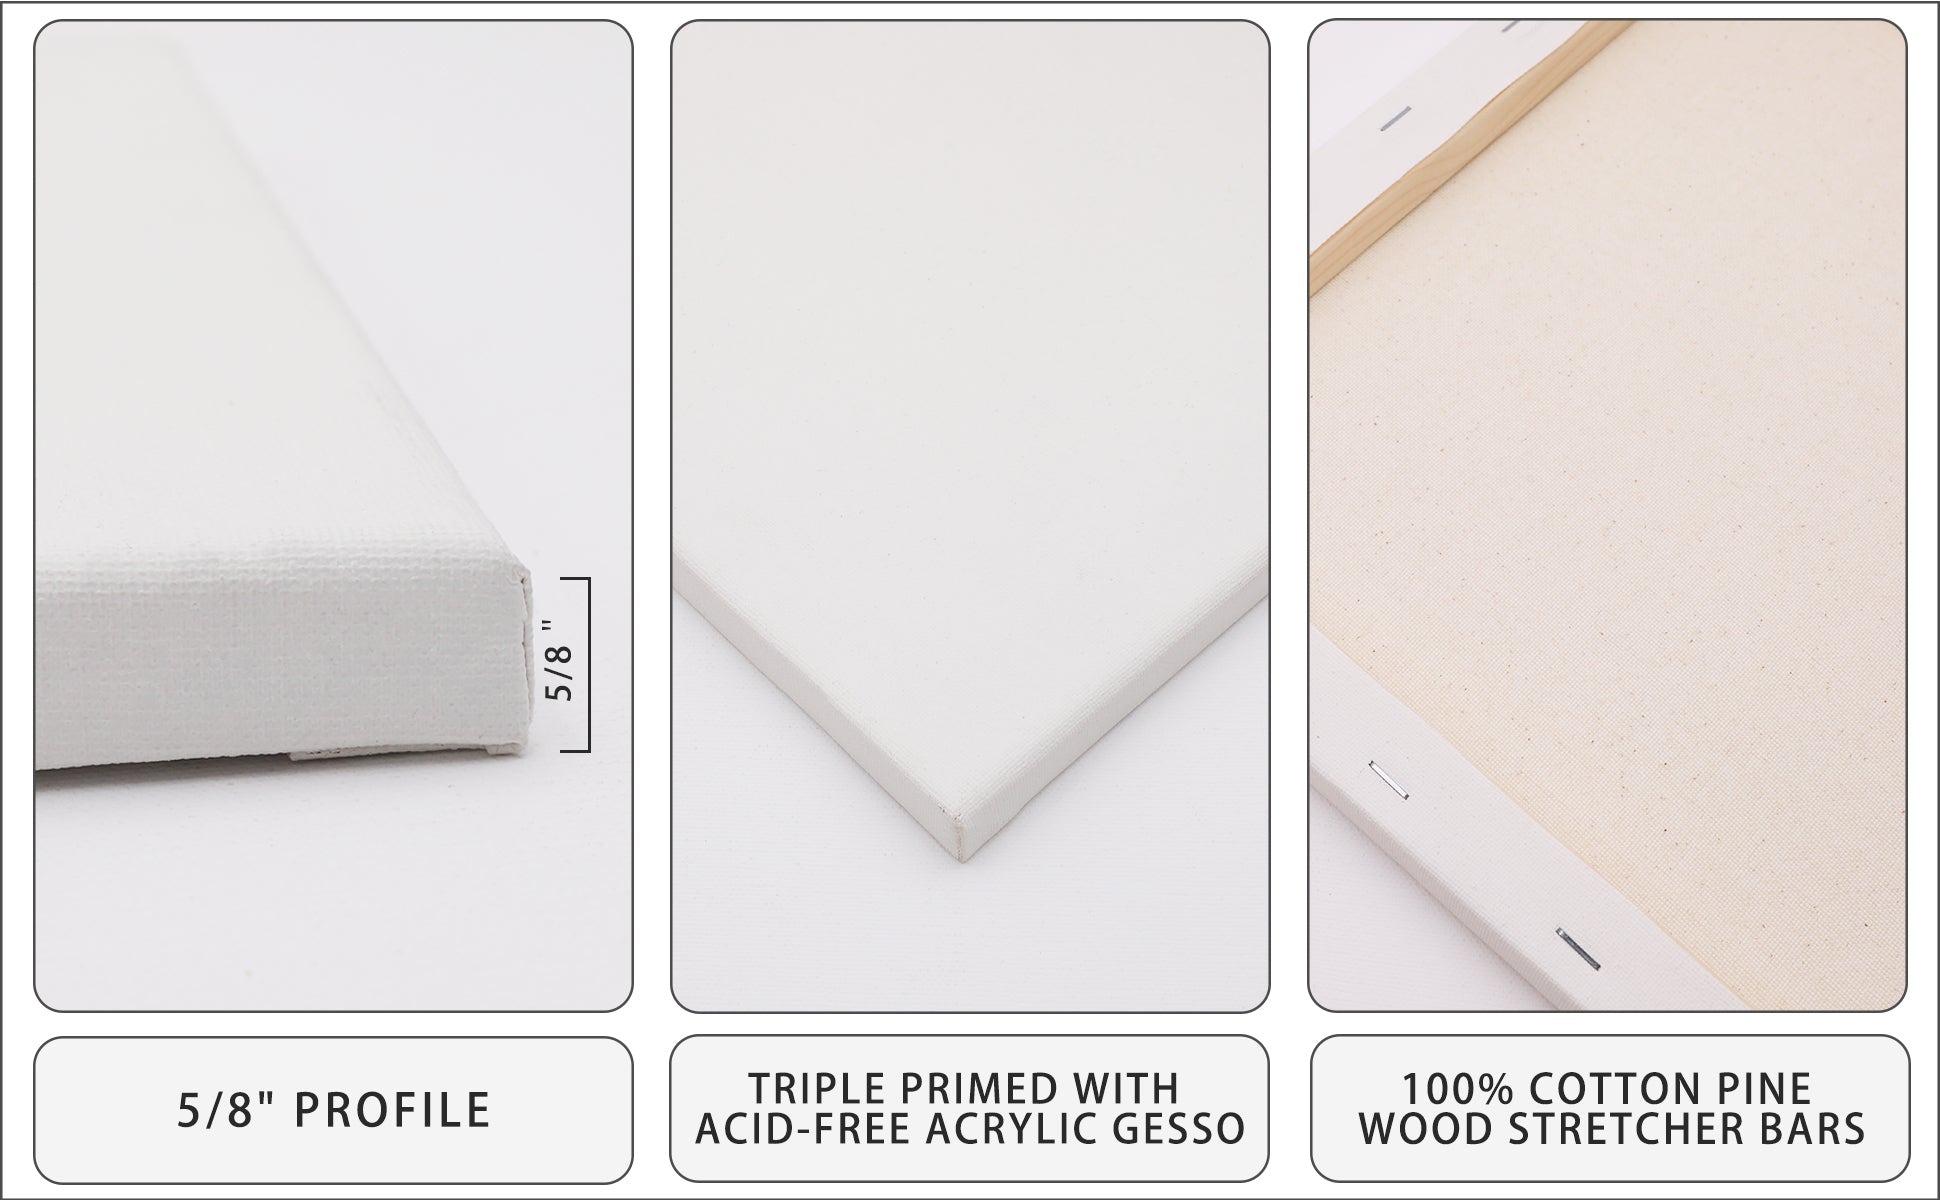 Artecho Stretched Canvas 6 Set Value Pack White - 30cm x 40cm - Lifespace